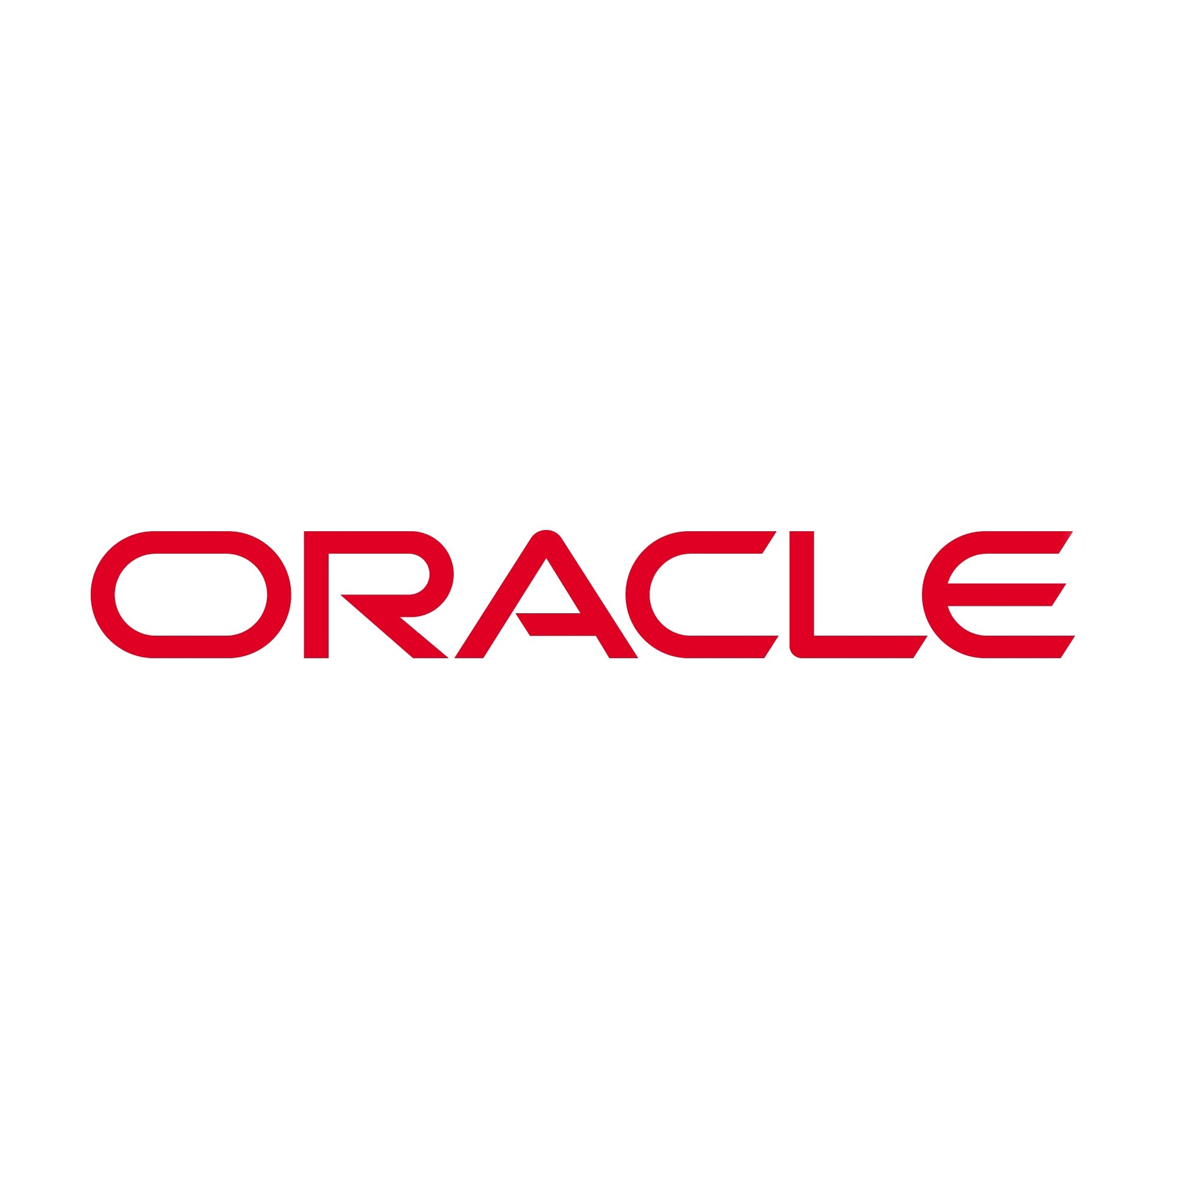  Leading Cloud CRM Application Logo: Oracle